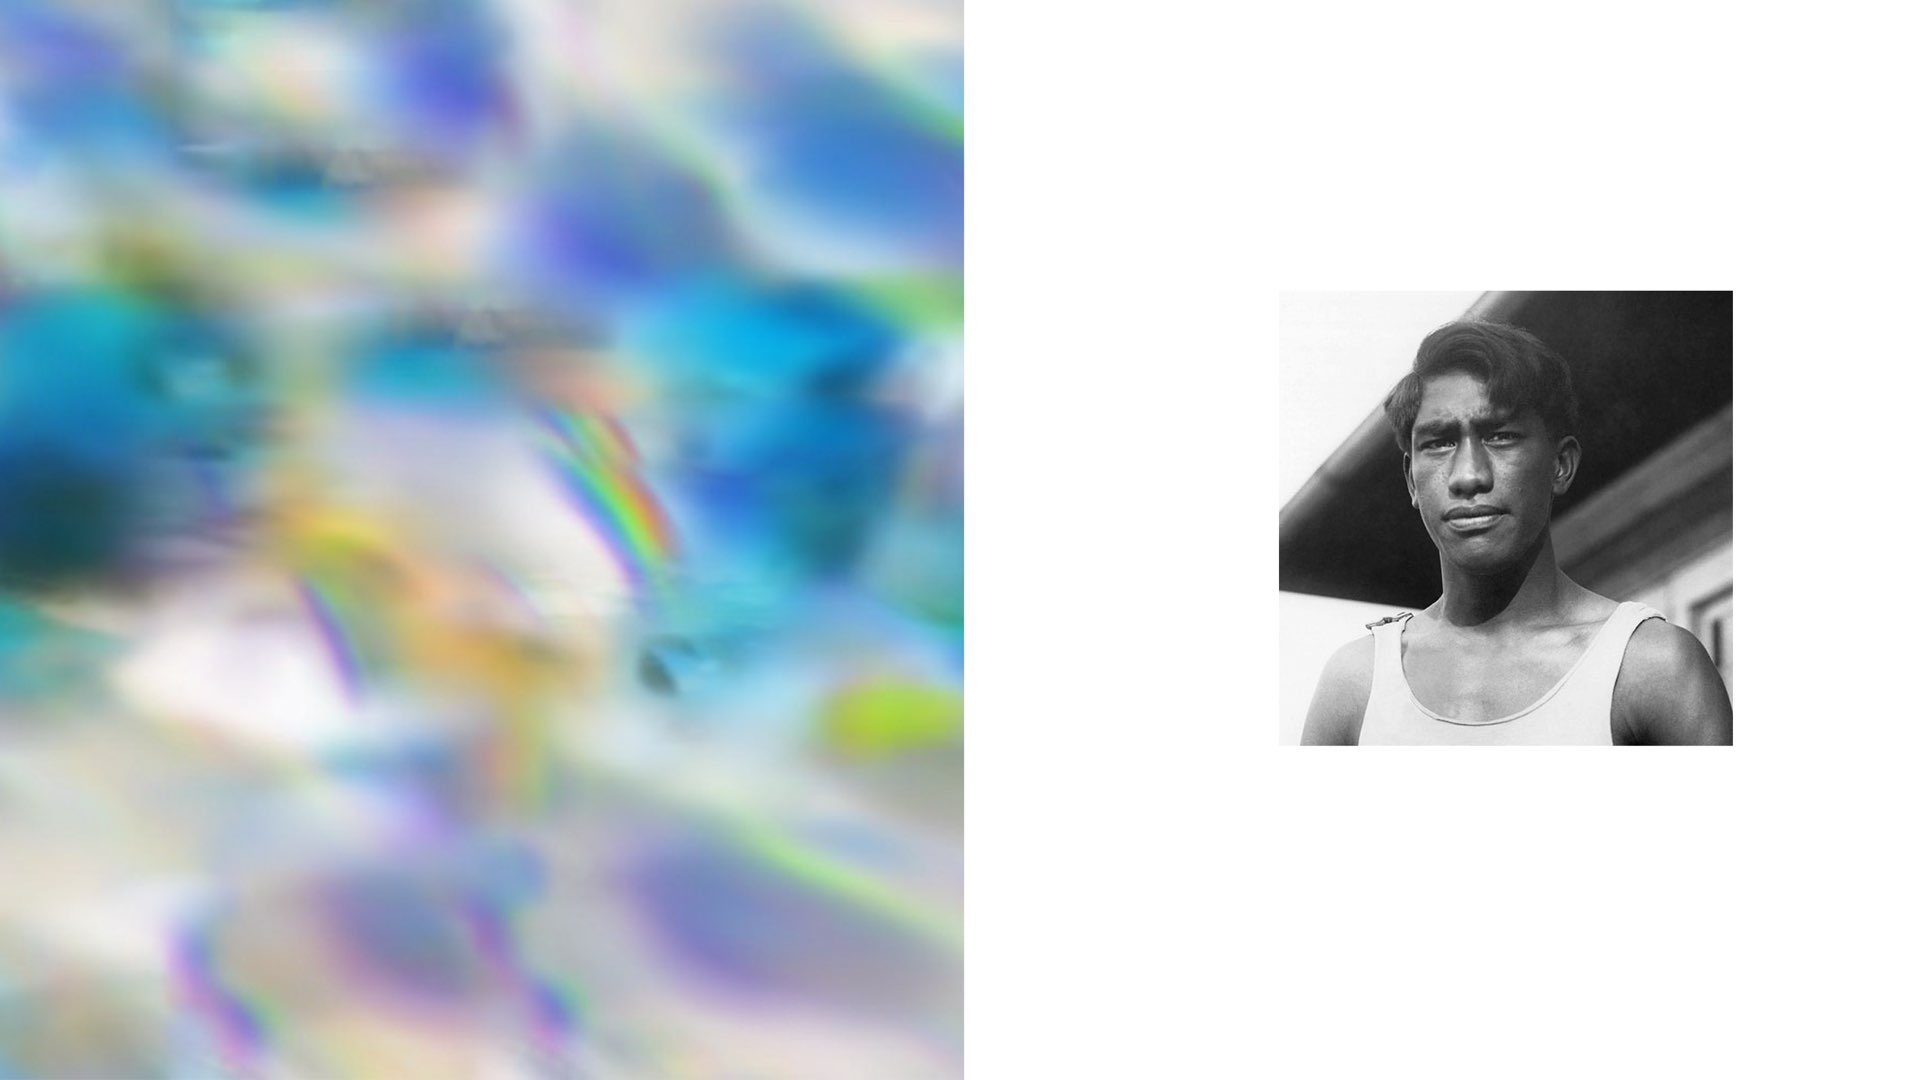 Artist Maja Petrić used machine learning algorithms to create this sky graphic, shown alongside a portrait of man